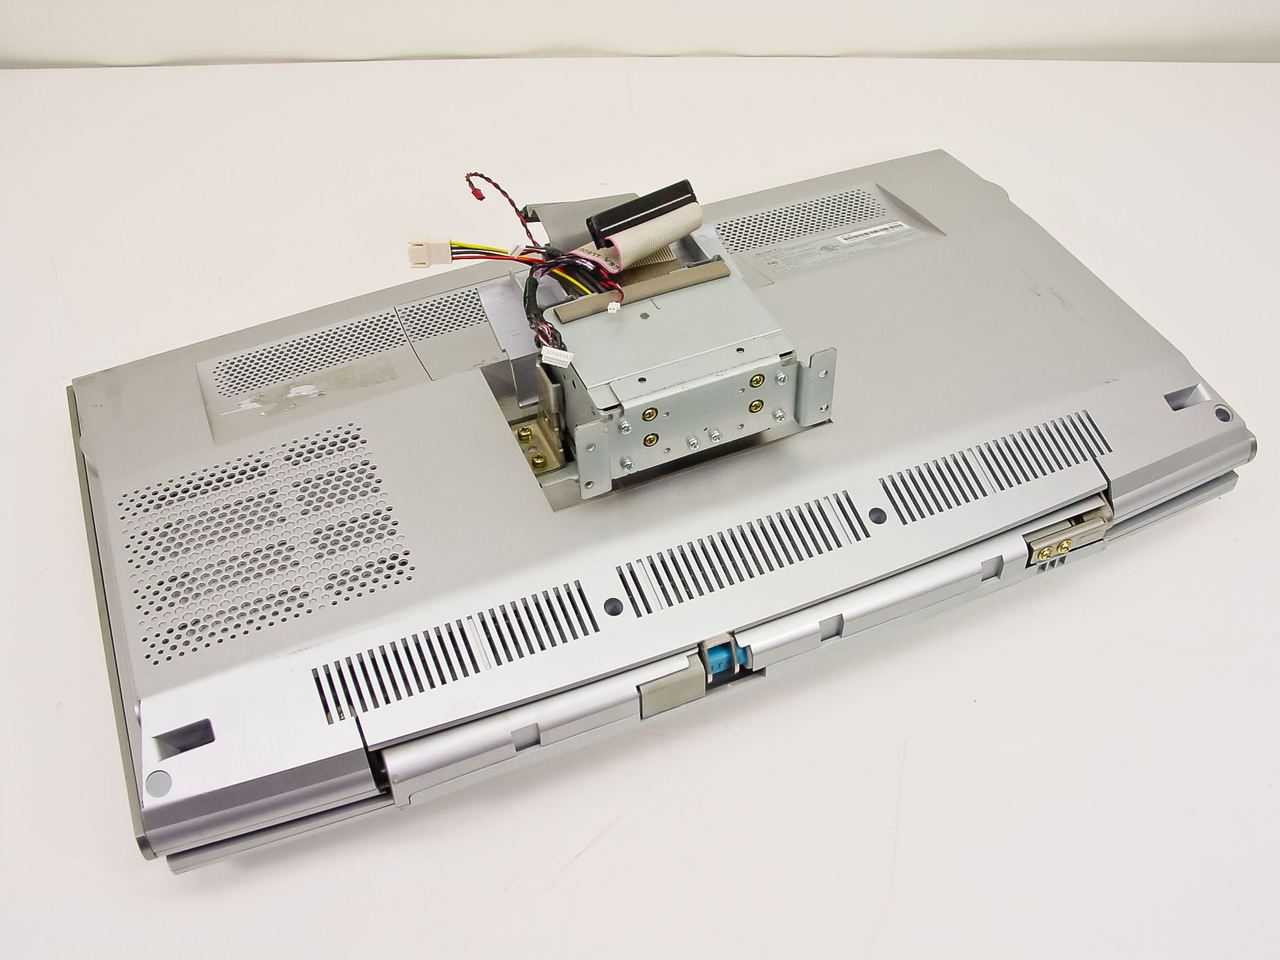 Sony PCV-W510G Vaio Computer 17